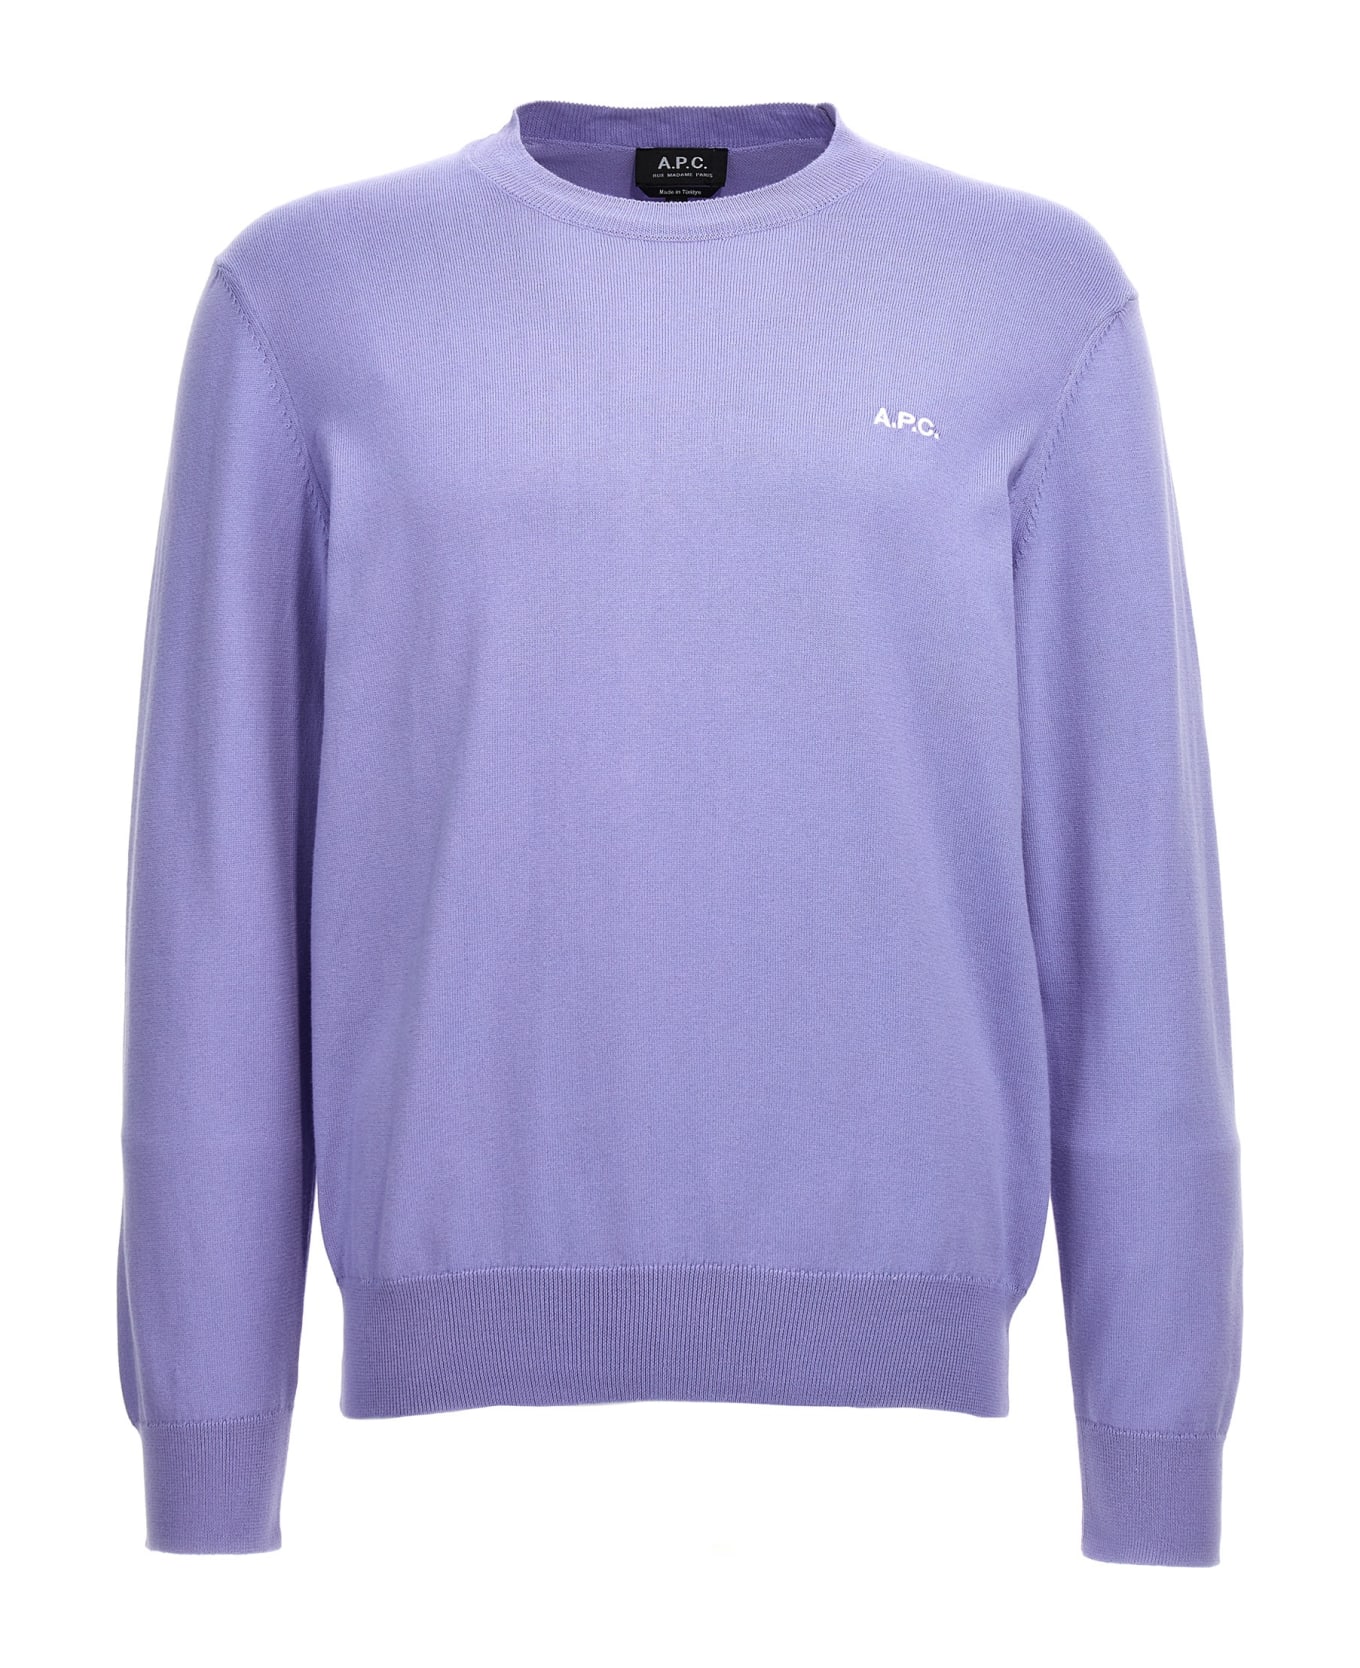 A.P.C. Melville Cotton Knit Sweater - Purple